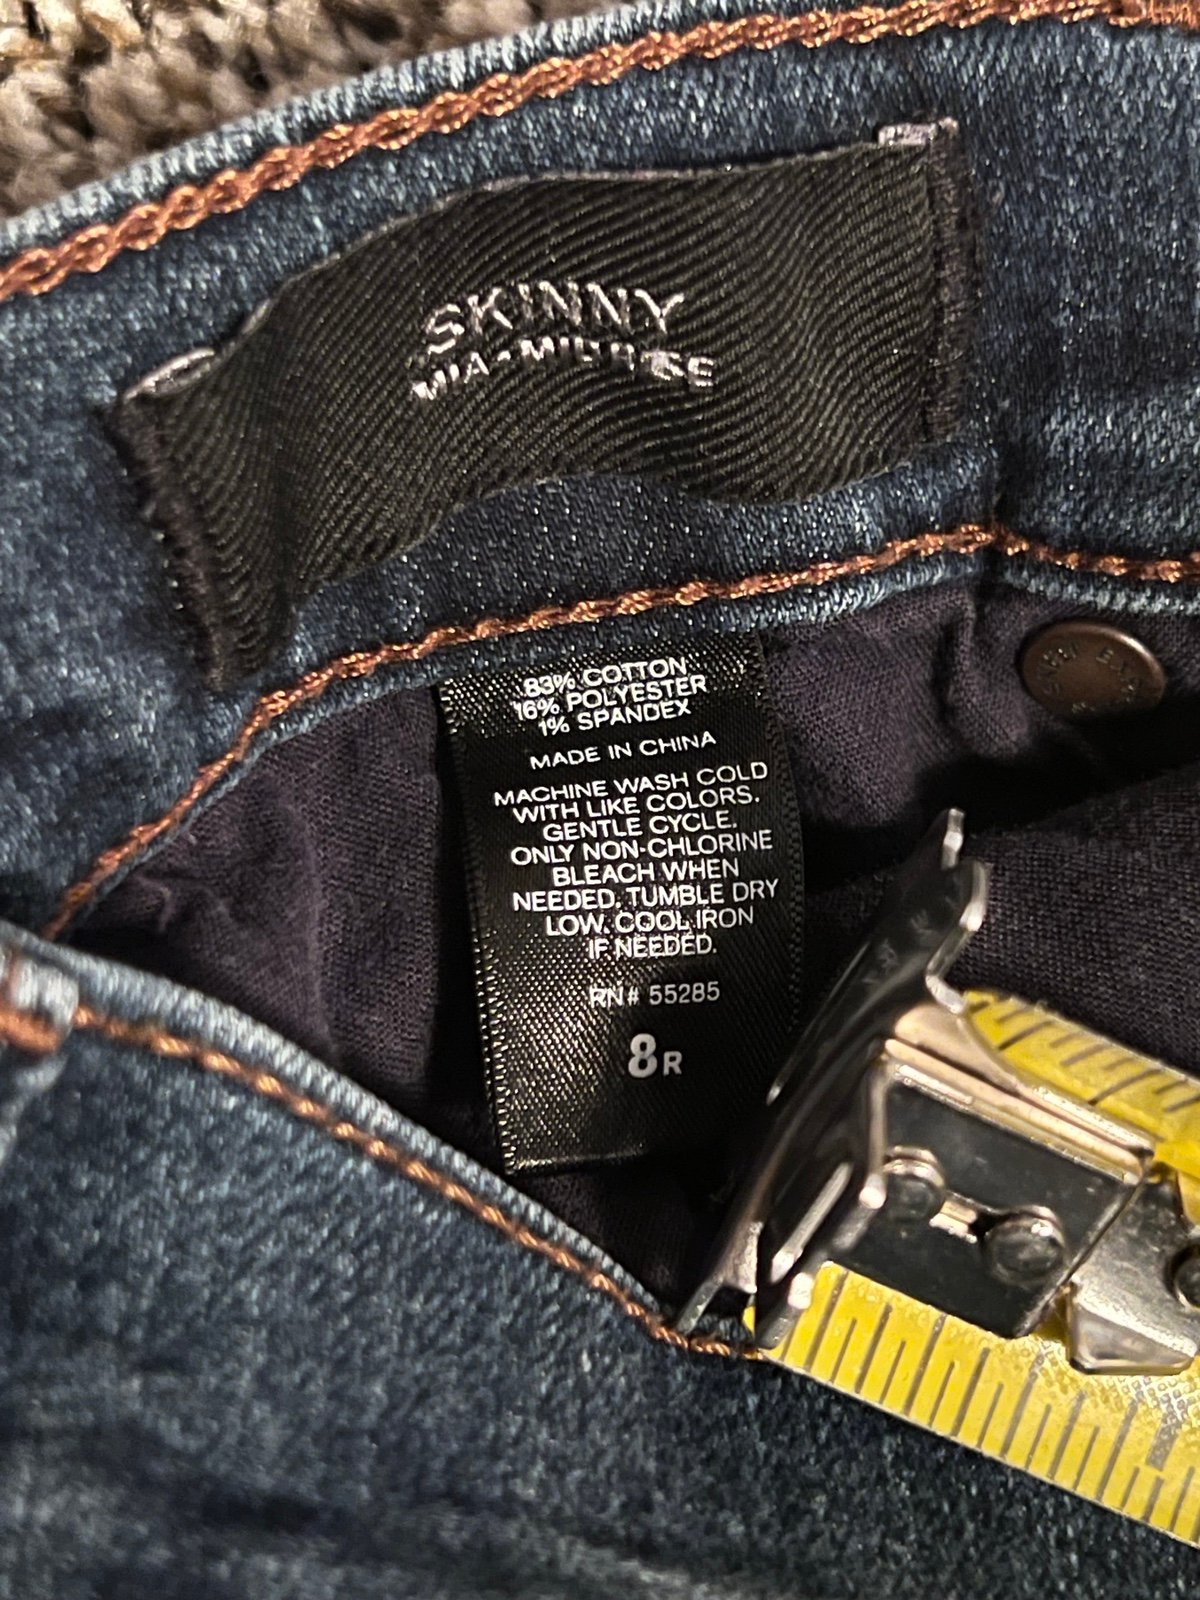 reasonable price Express Jeans Womens Size 8R Blue Denim MIA Skinny Mid Rise Outdoors Retro JoZbfANTJ just buy it